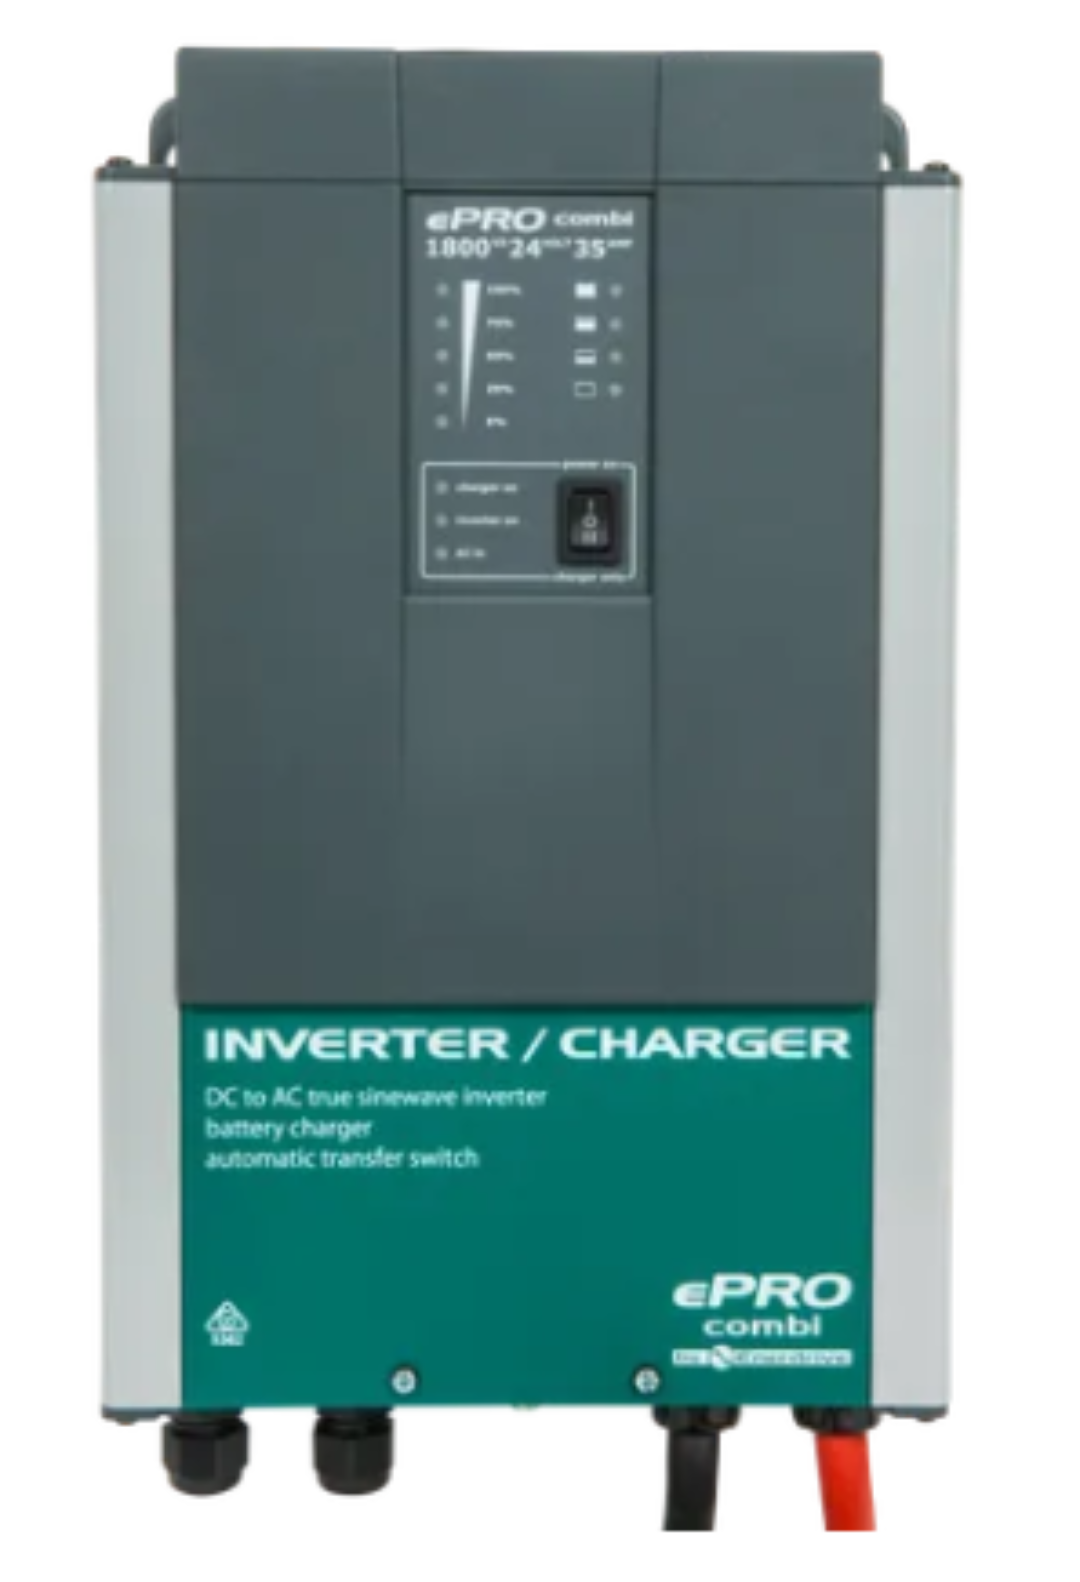 Enerdrive ePRO Combi Inverter Charger 24V 1800W 35A W/Remote EPC-1800-24-KIT